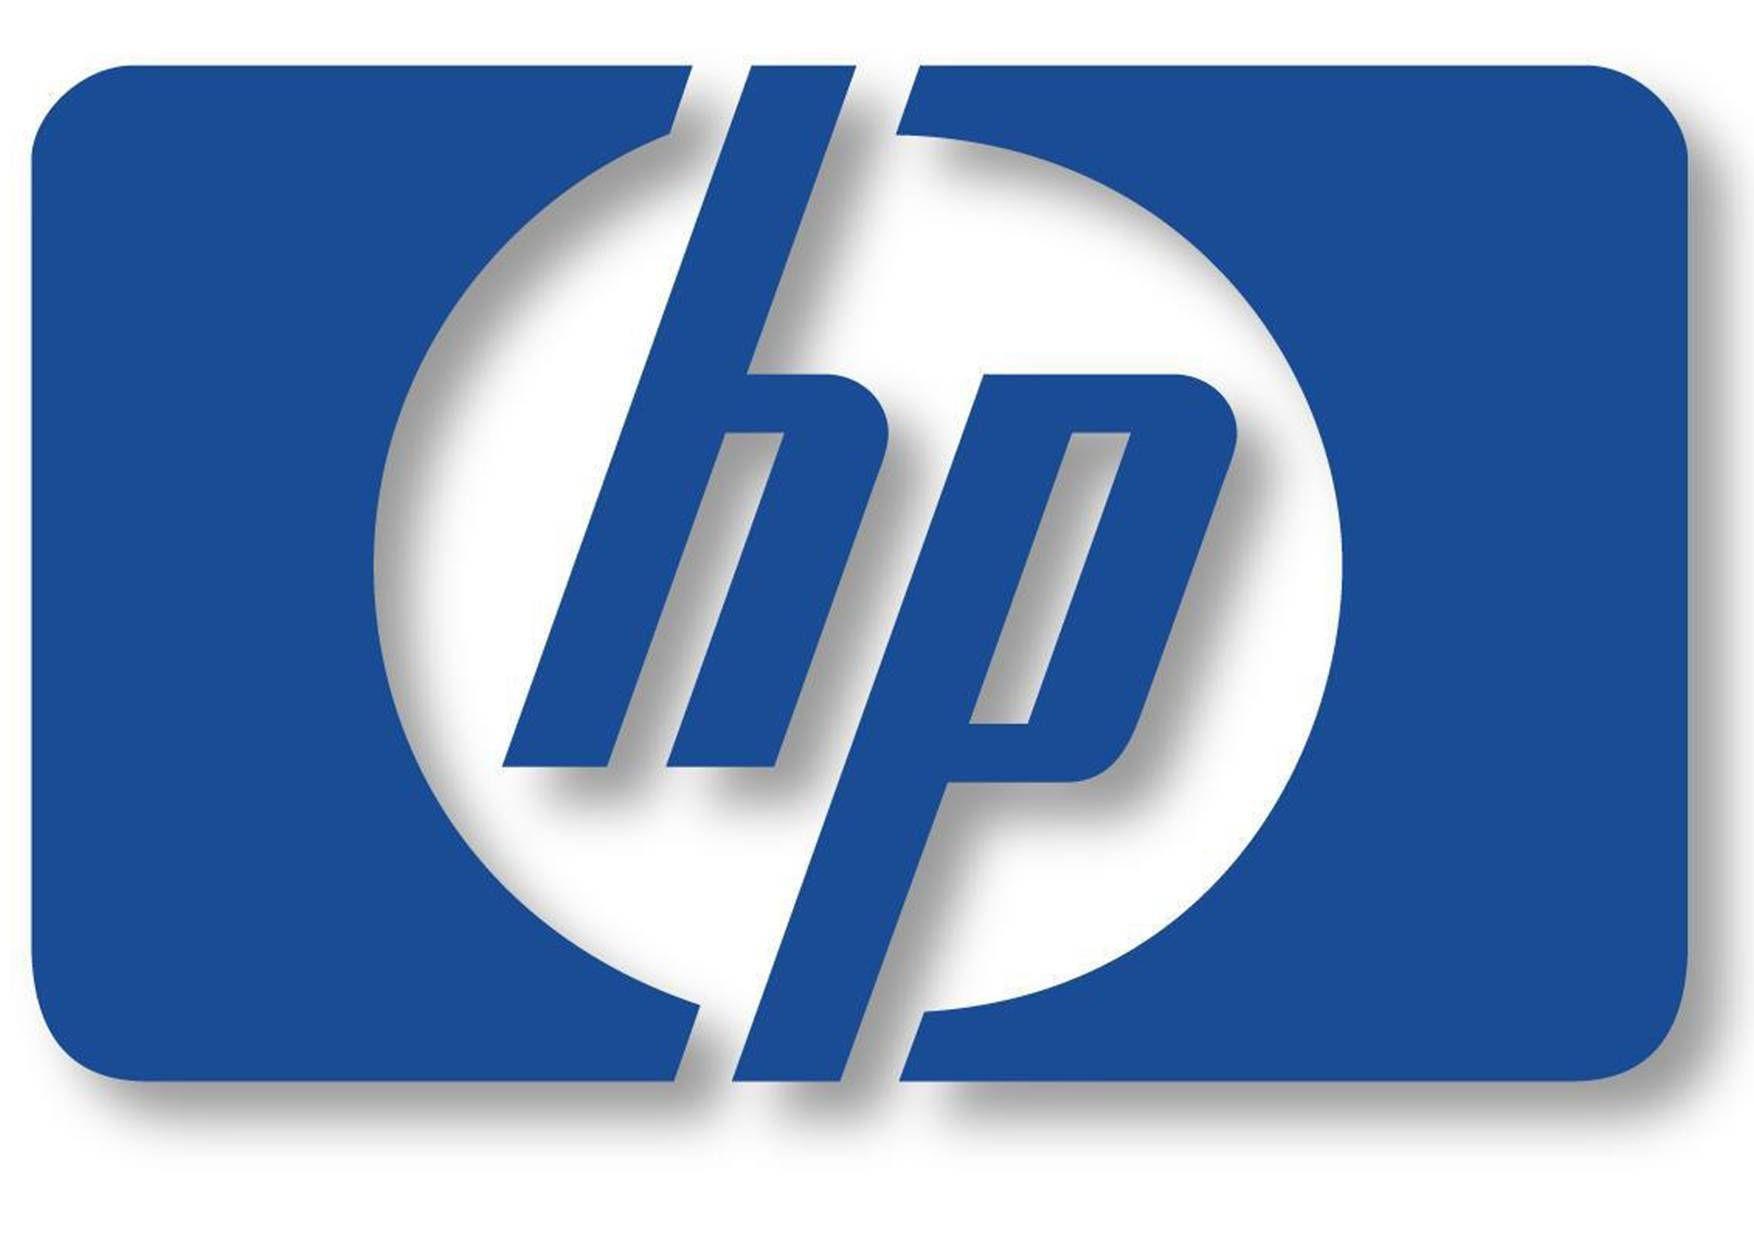 HP Cloud Logo - HP Pumps $1 Billion Into Cloud Computing With HP Helion